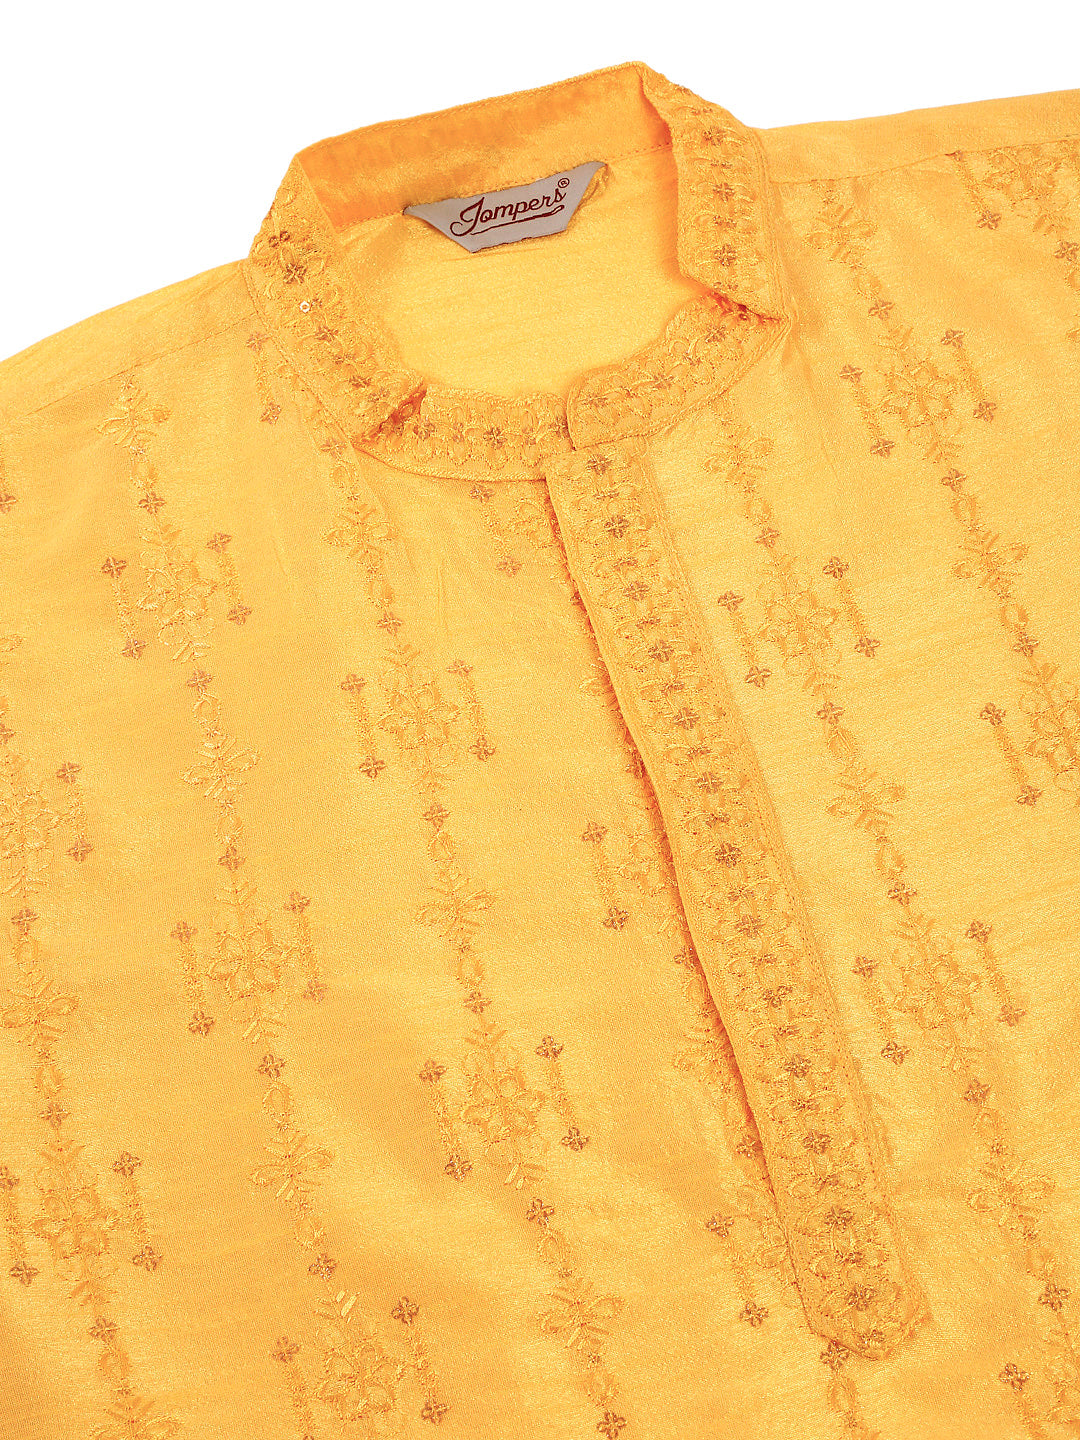 Men's Silk Blend Collar Embroidered Kurta Pyjama Set ( Jokp 665 Yellow ) - Virat Fashions